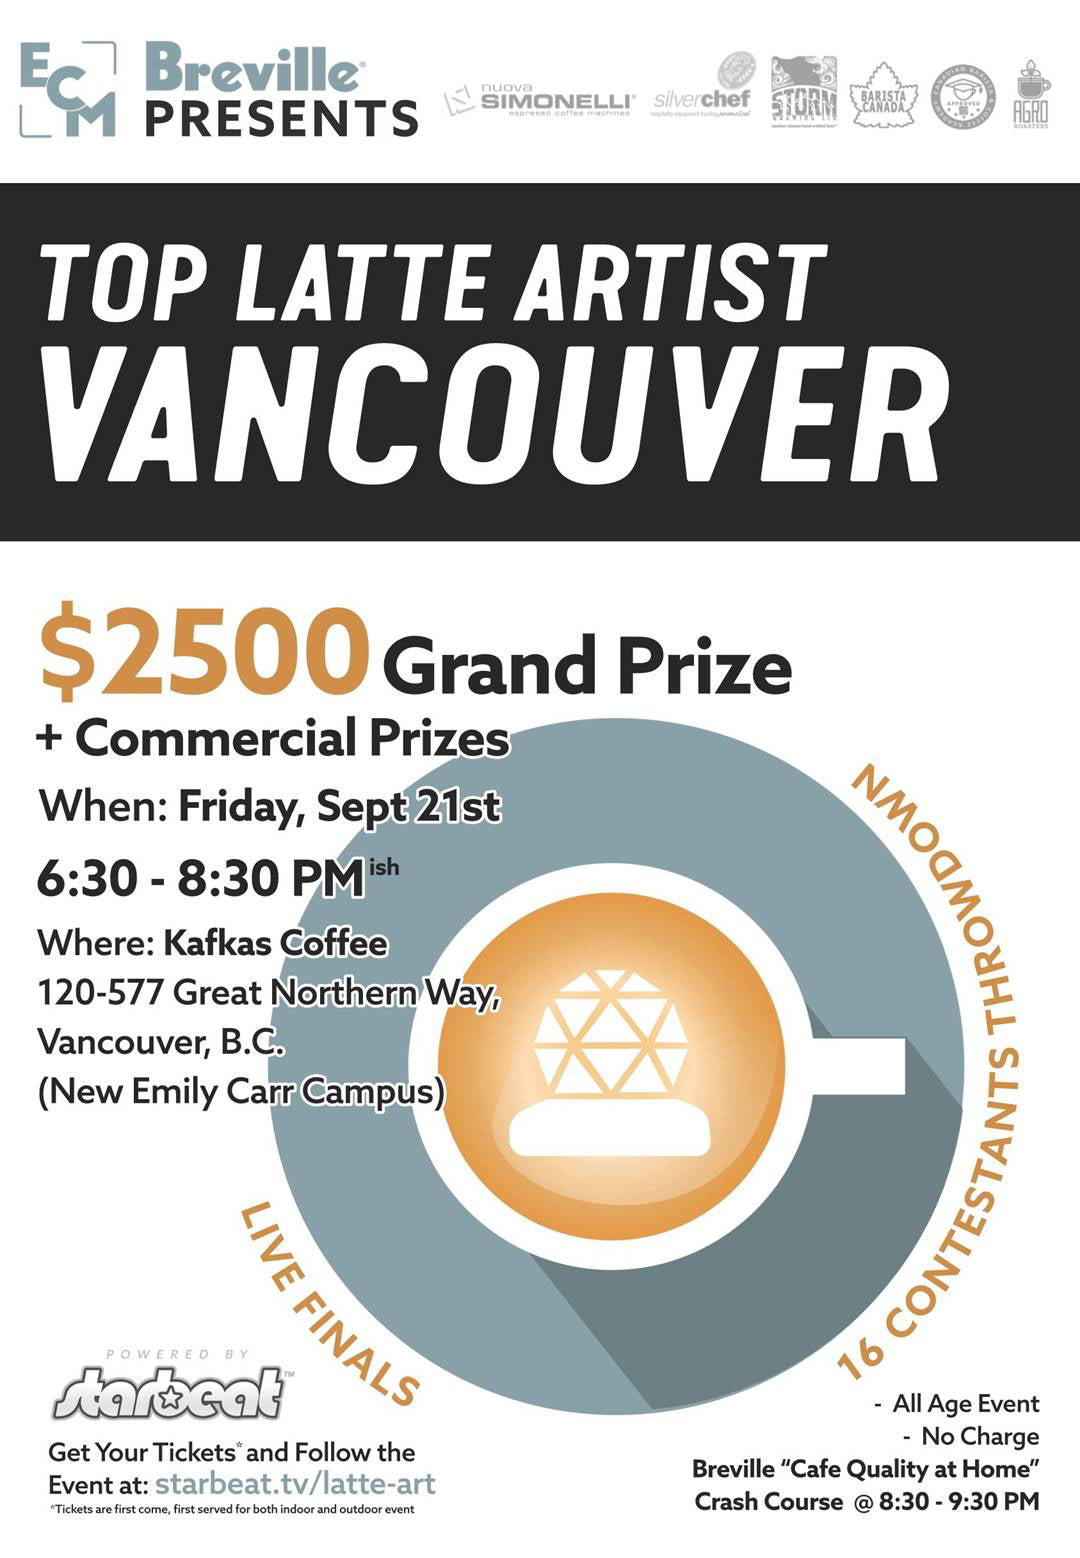 Top Latte Artist Vancouver Poster